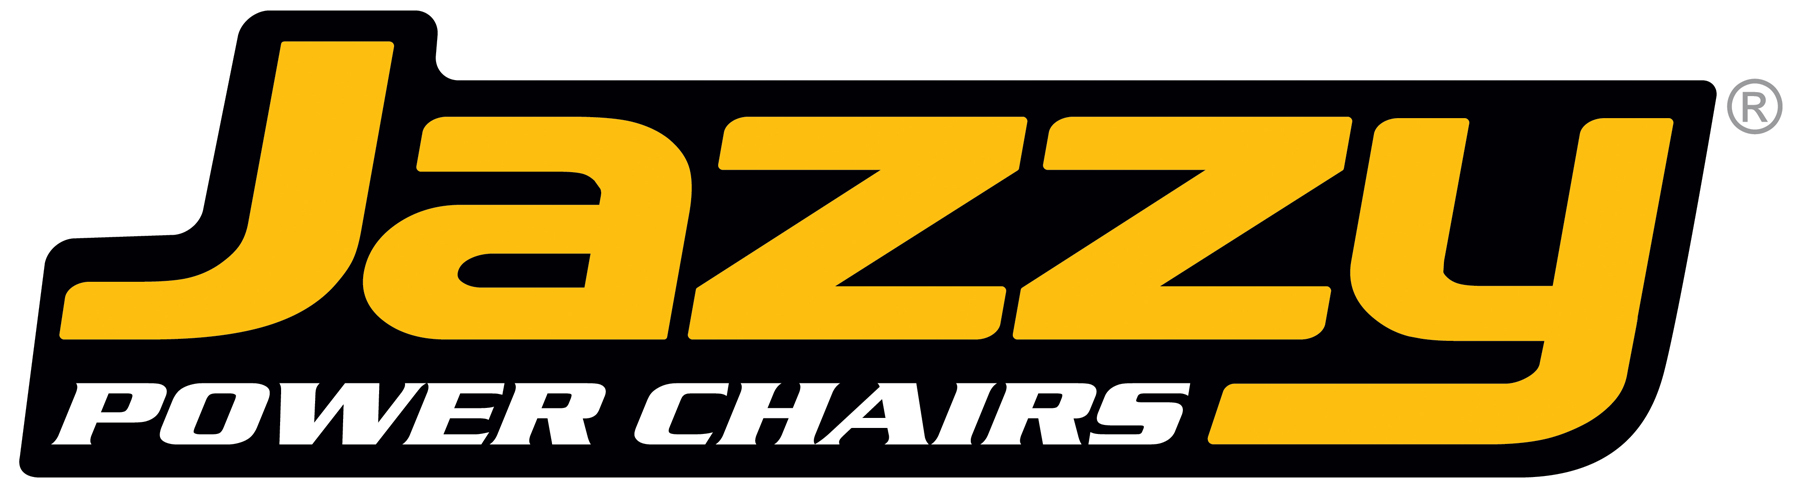 jazzy-power-chairs-logo-2-09.jpg